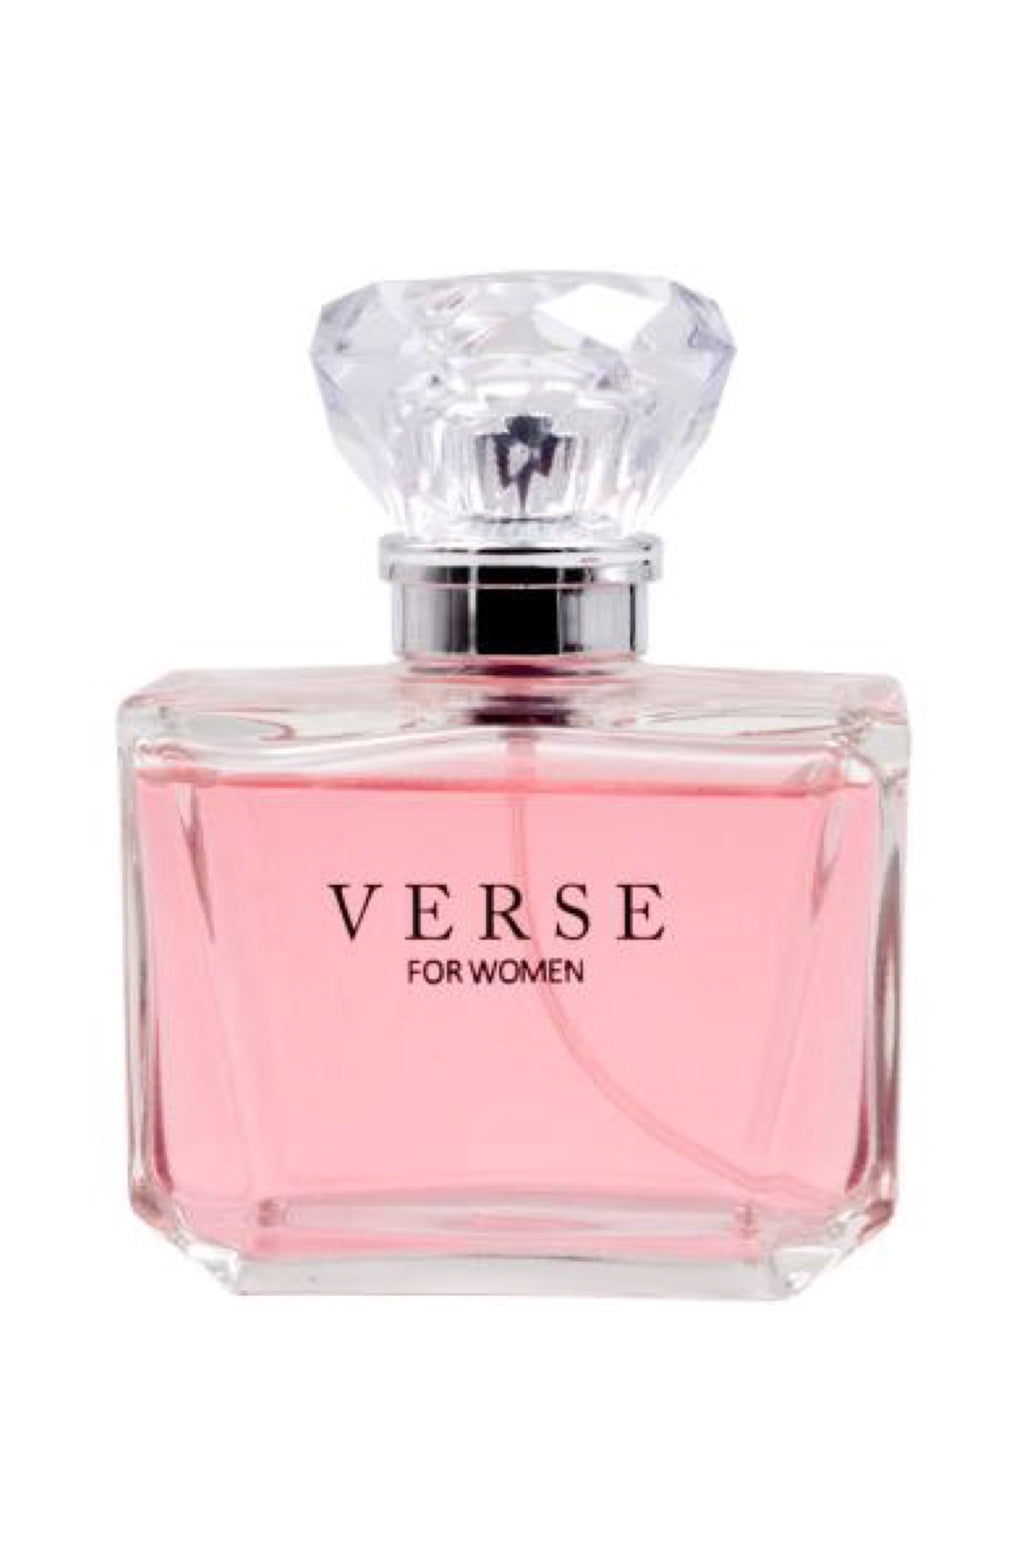 Verse Perfume Bottle